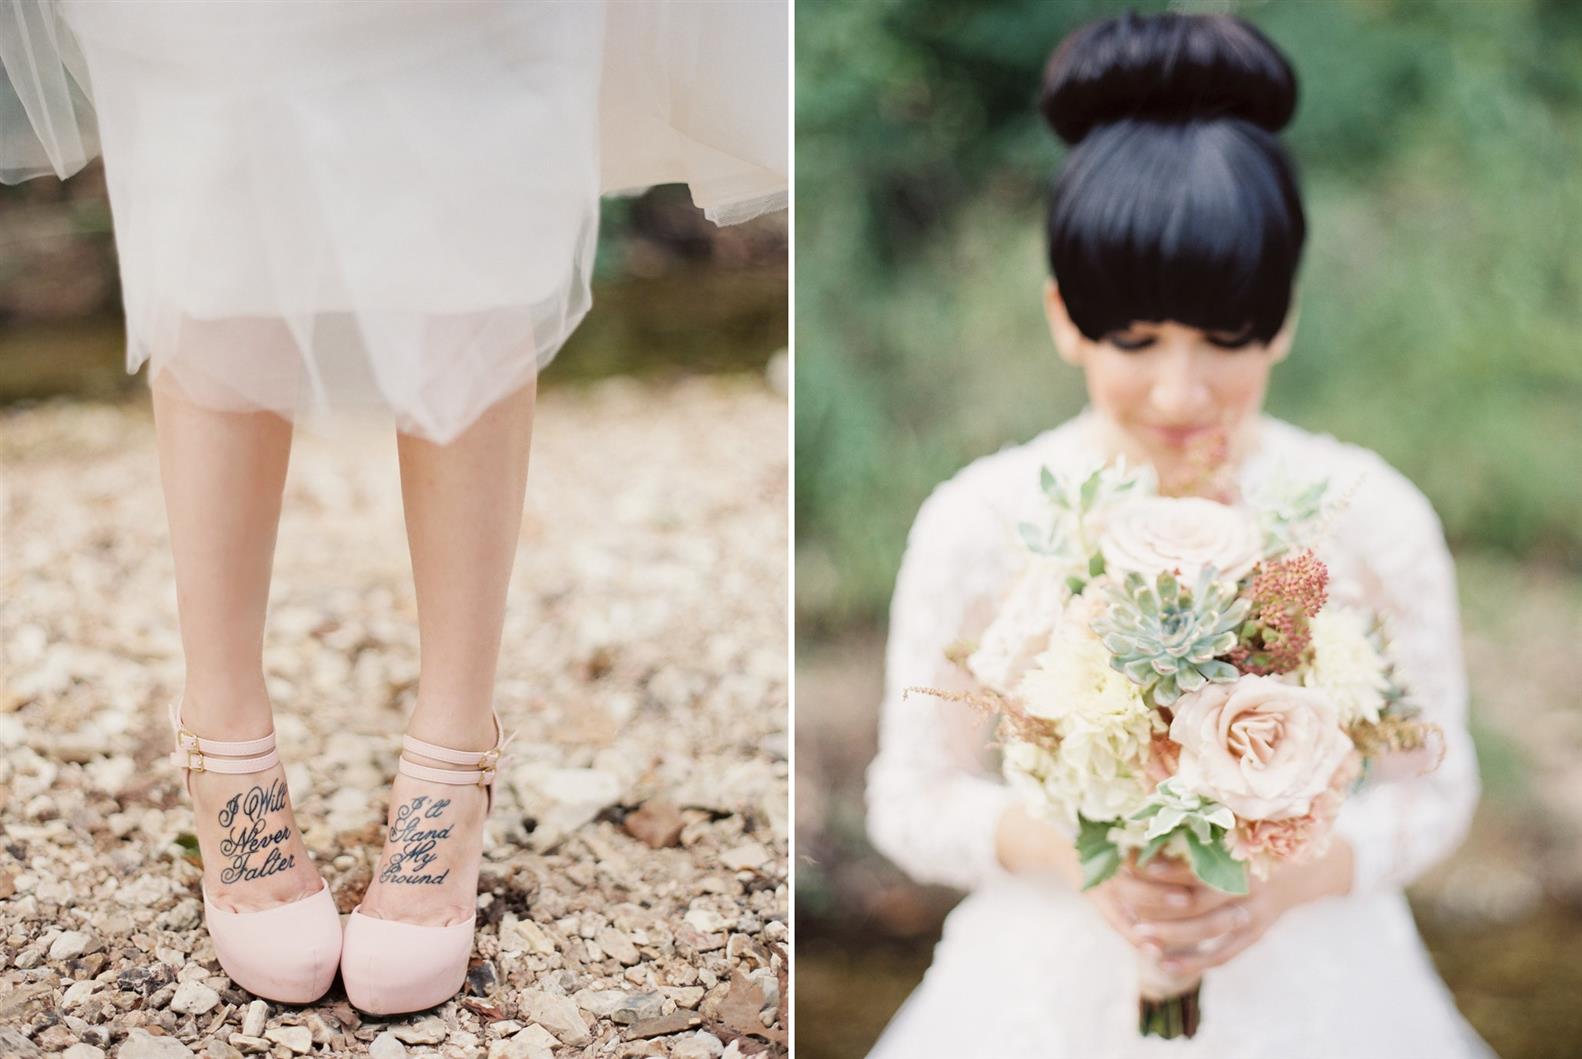 Bridal Shoes & Bouquet - A Stylish Modern-Vintage Blush & Gold Wedding Inspiration Shoot